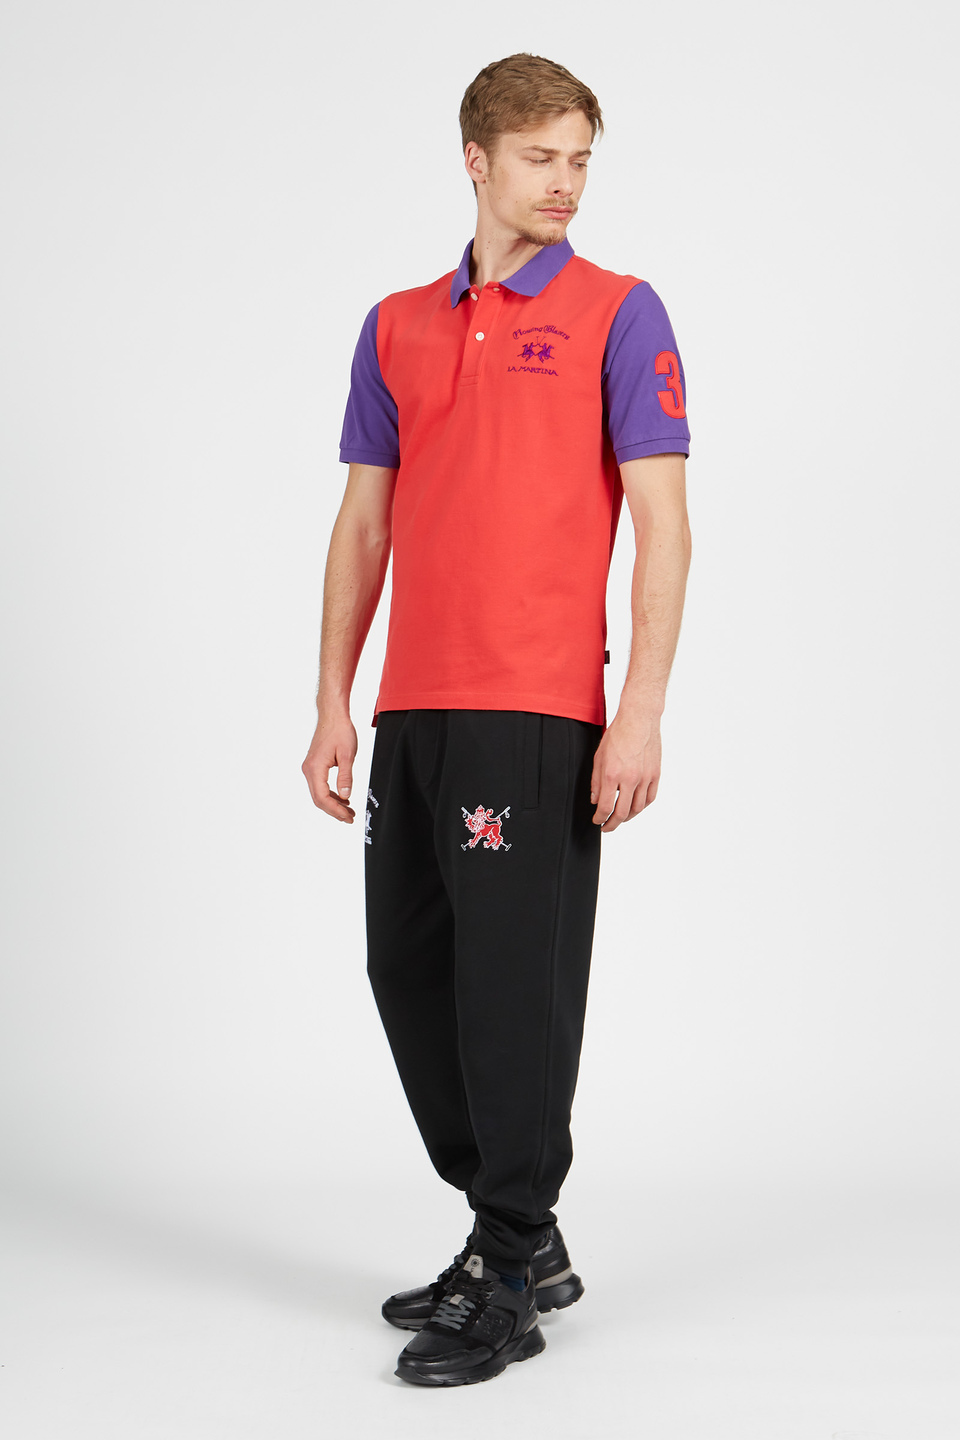 Comfort fit short-sleeved polo shirt | La Martina - Official Online Shop